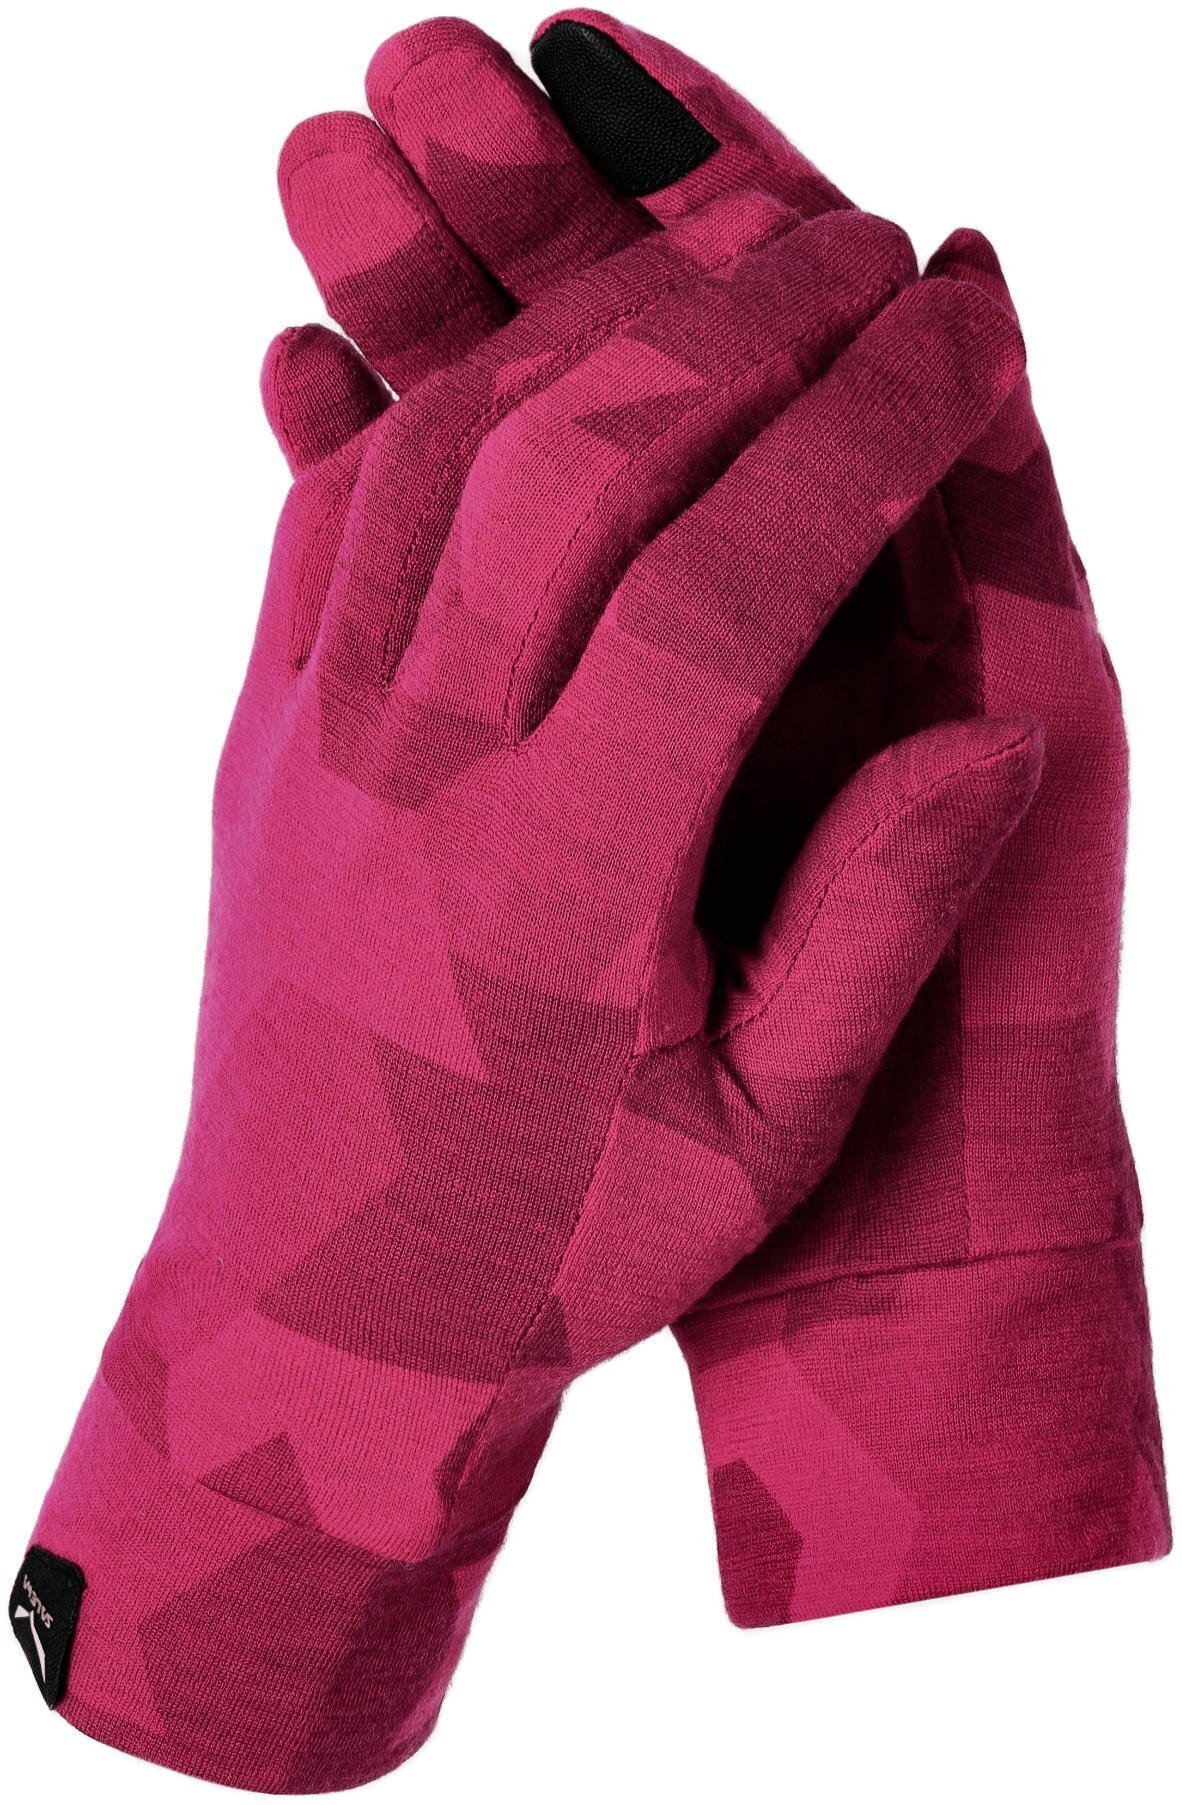 Перчатки женские Salewa Cristallo W Gloves 28514 6319 8/L розовый фото 2